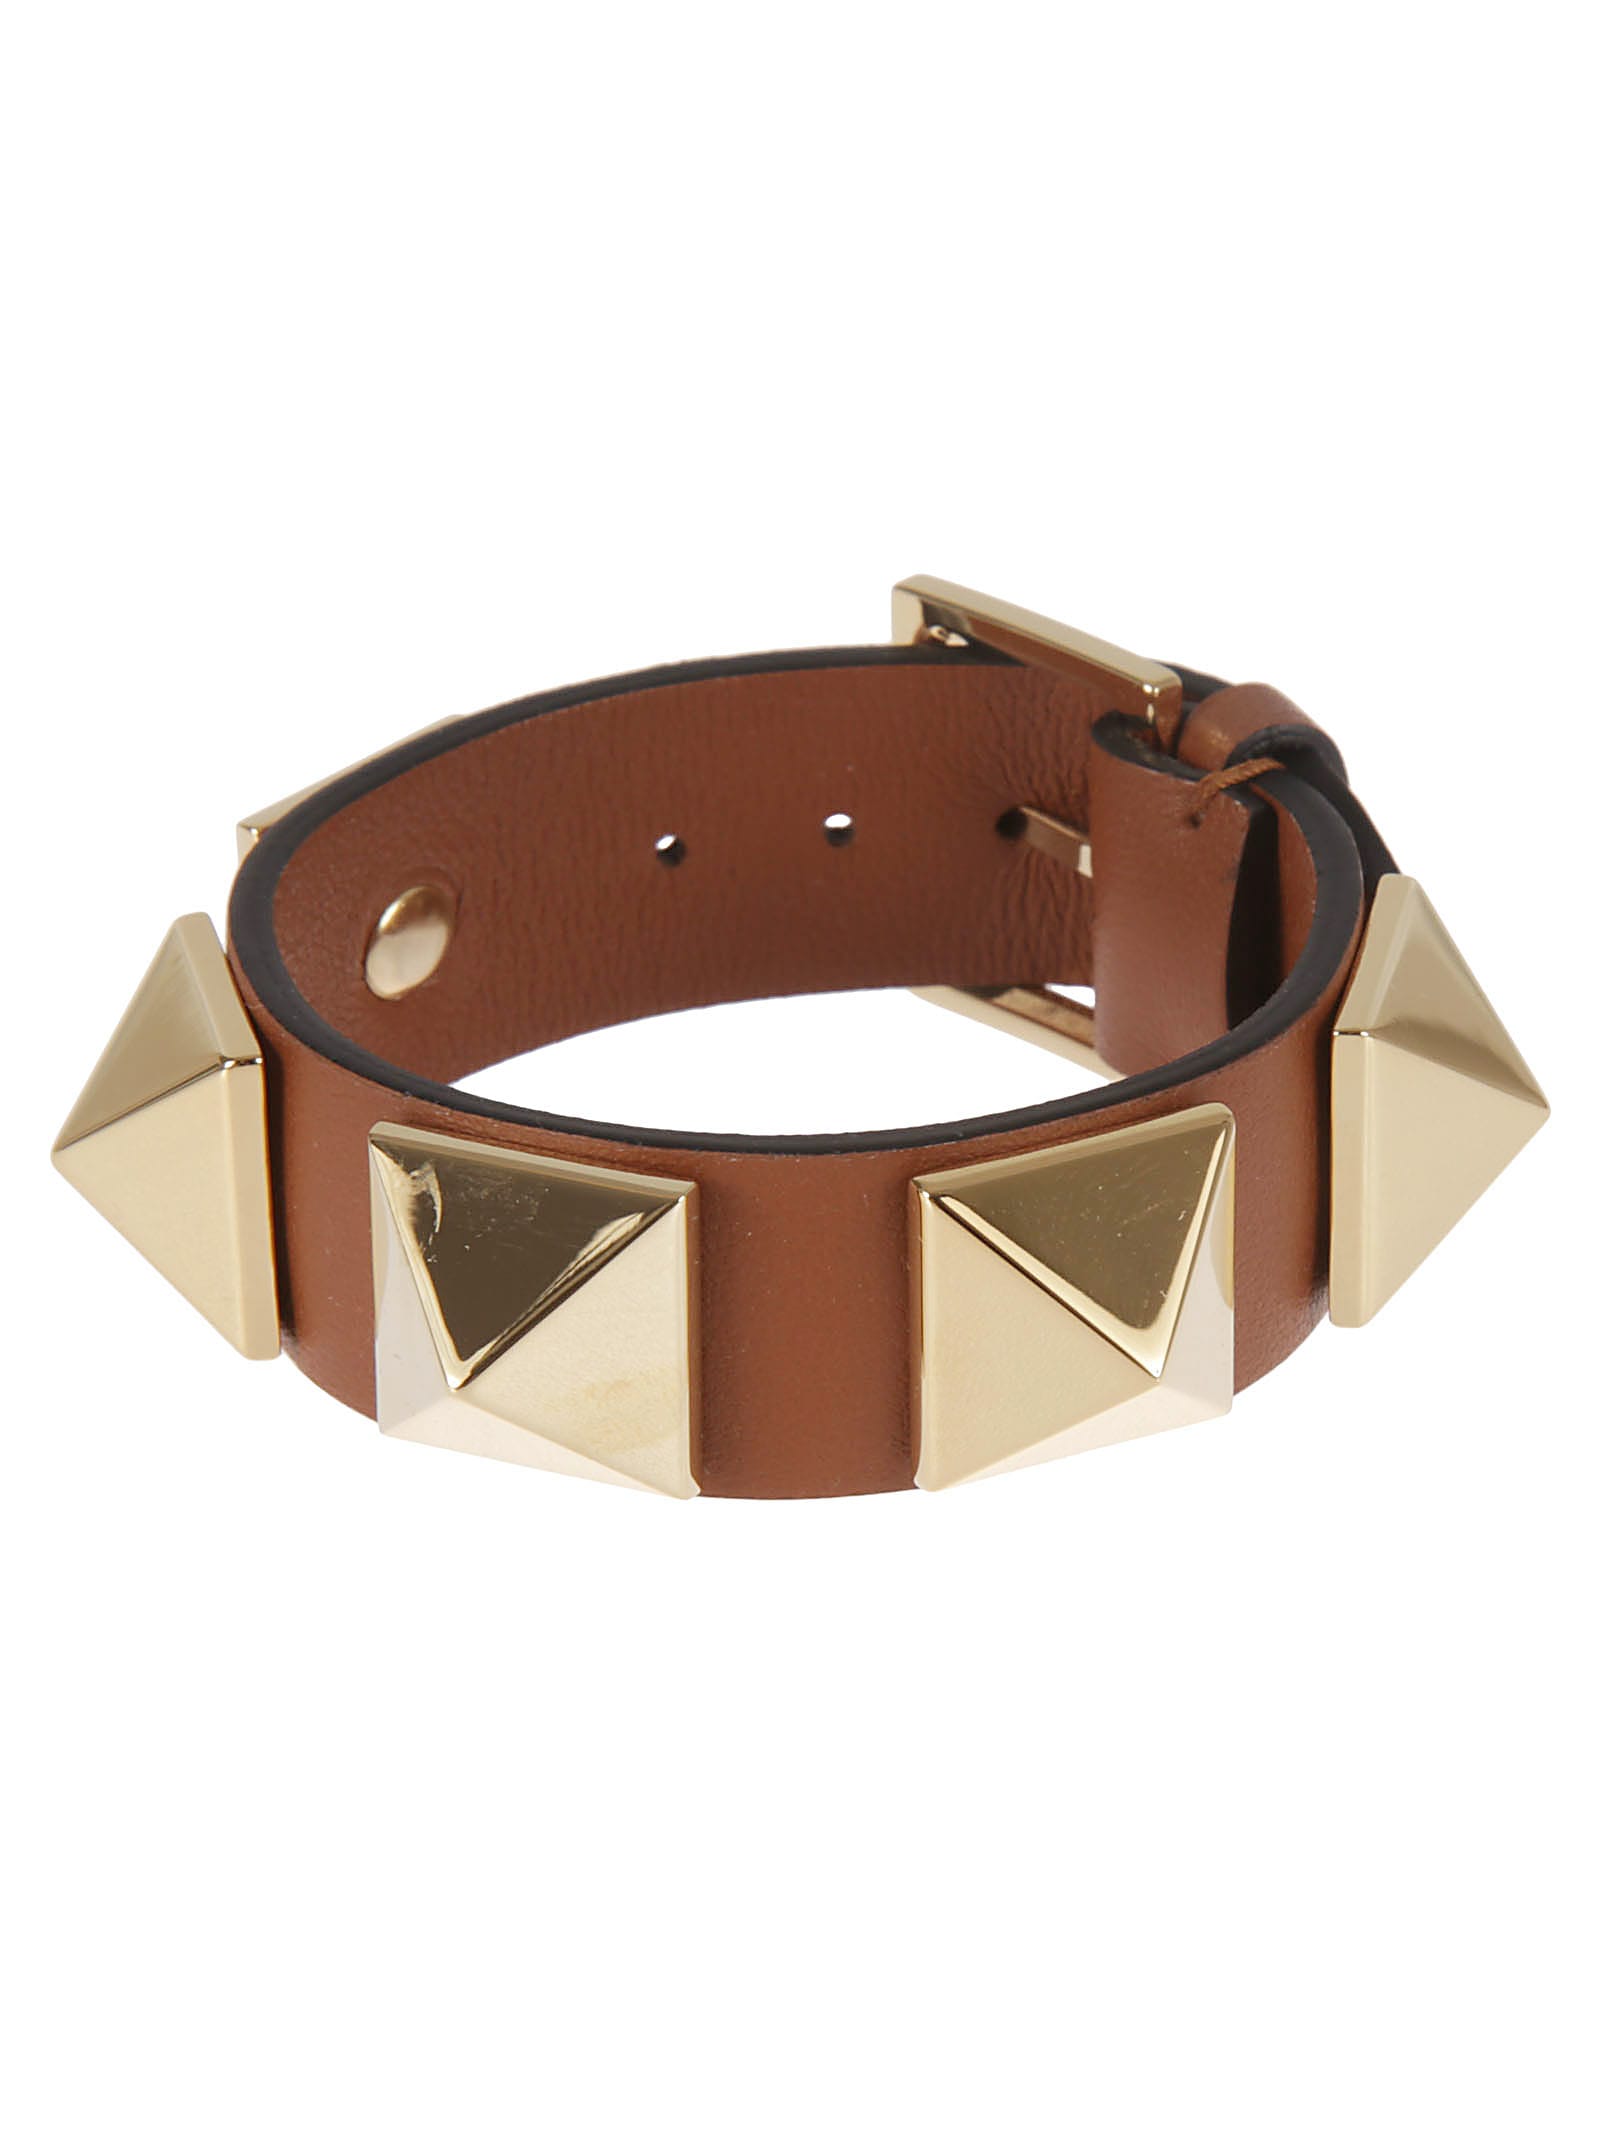 Valentino Garavani Rockstud Leather Bracelet In Brown/gold